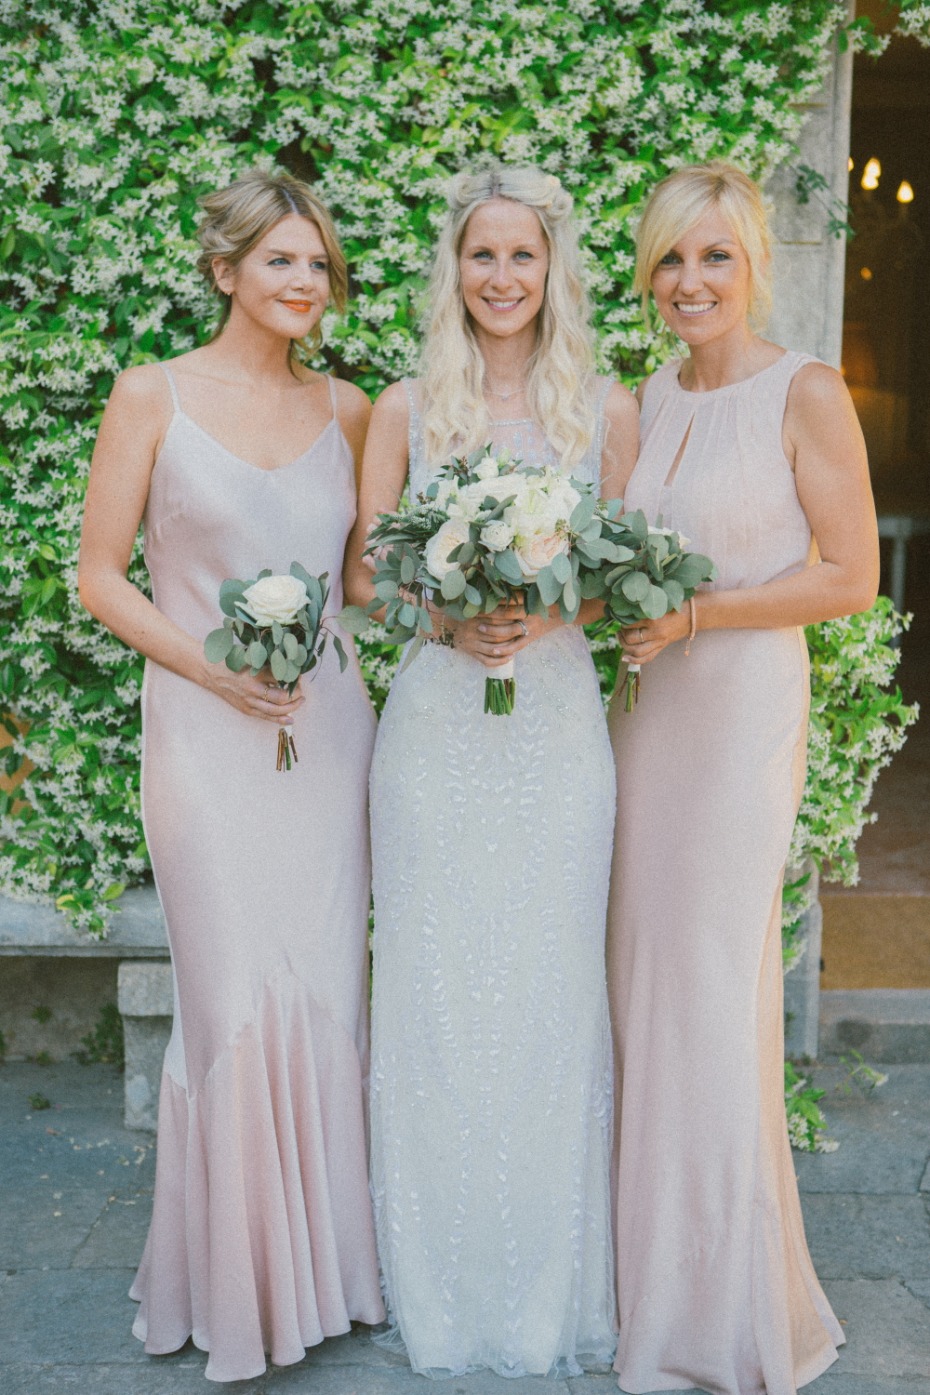 Bride and bridesmaids in blush wedding dress